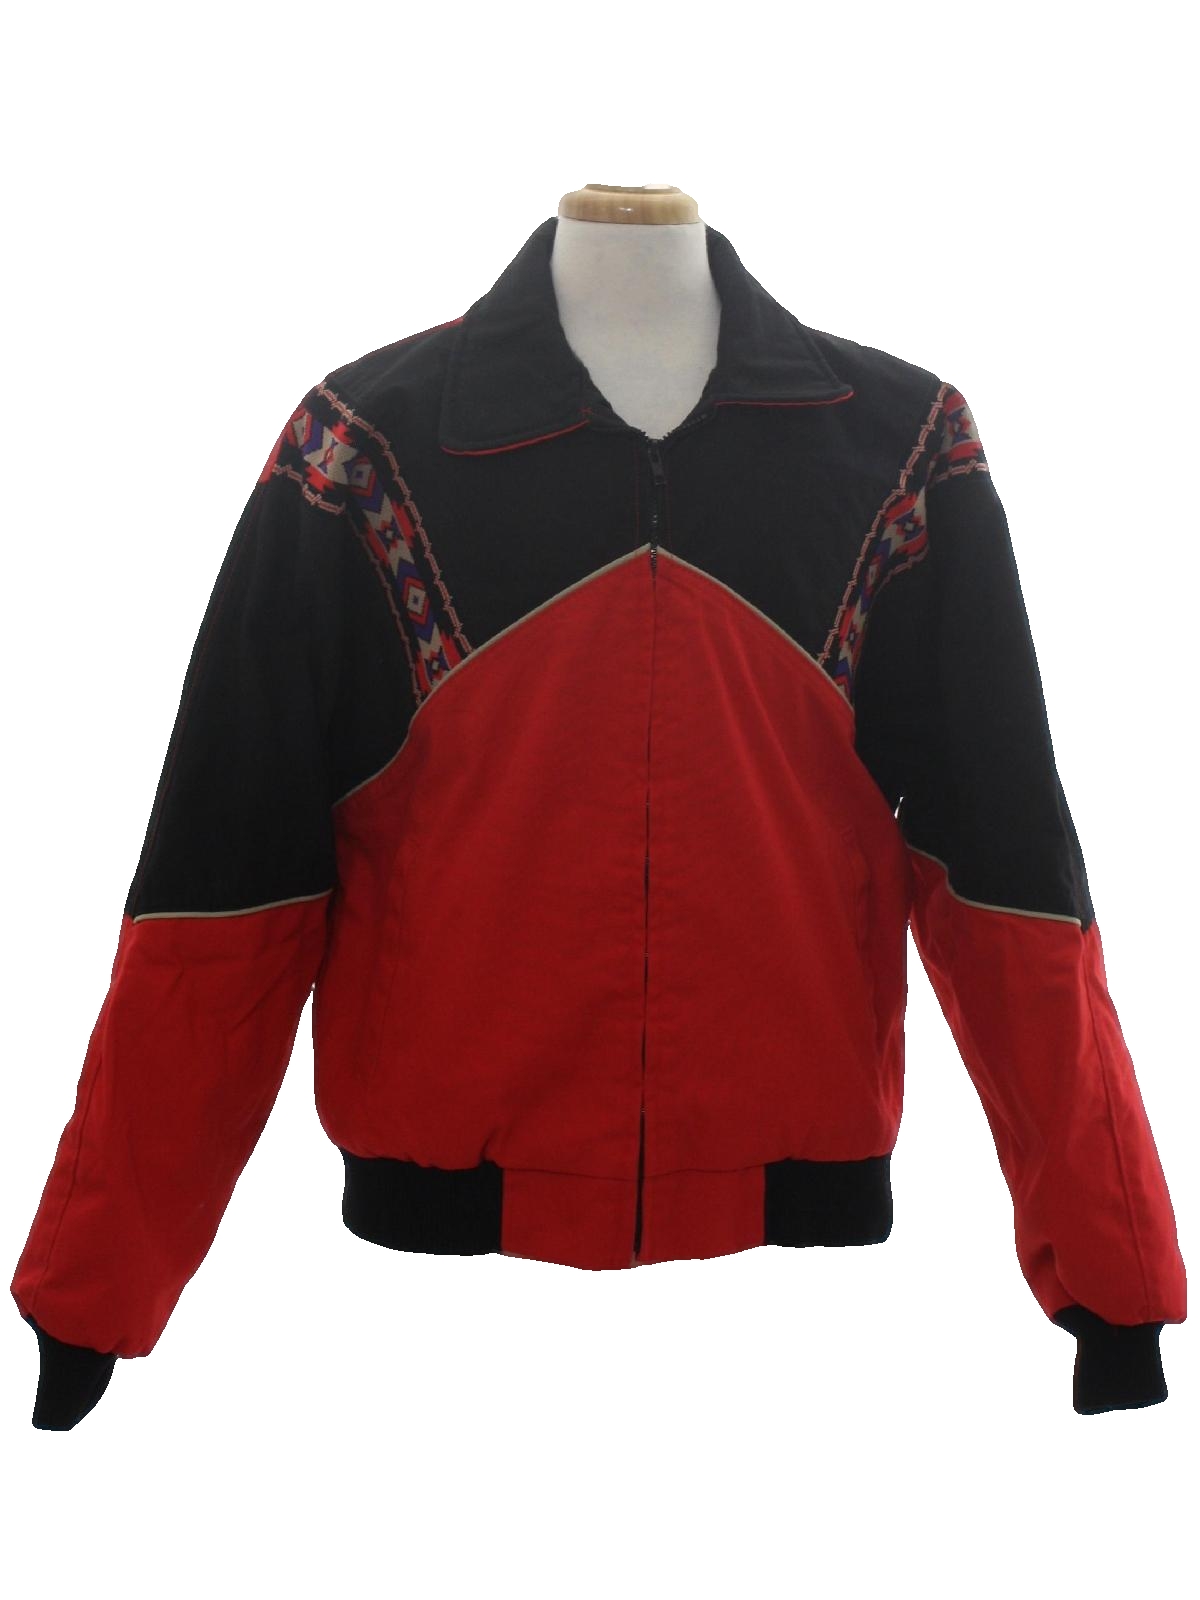 Davis James Eighties Vintage Jacket: 80s -Davis James- Mens red and ...